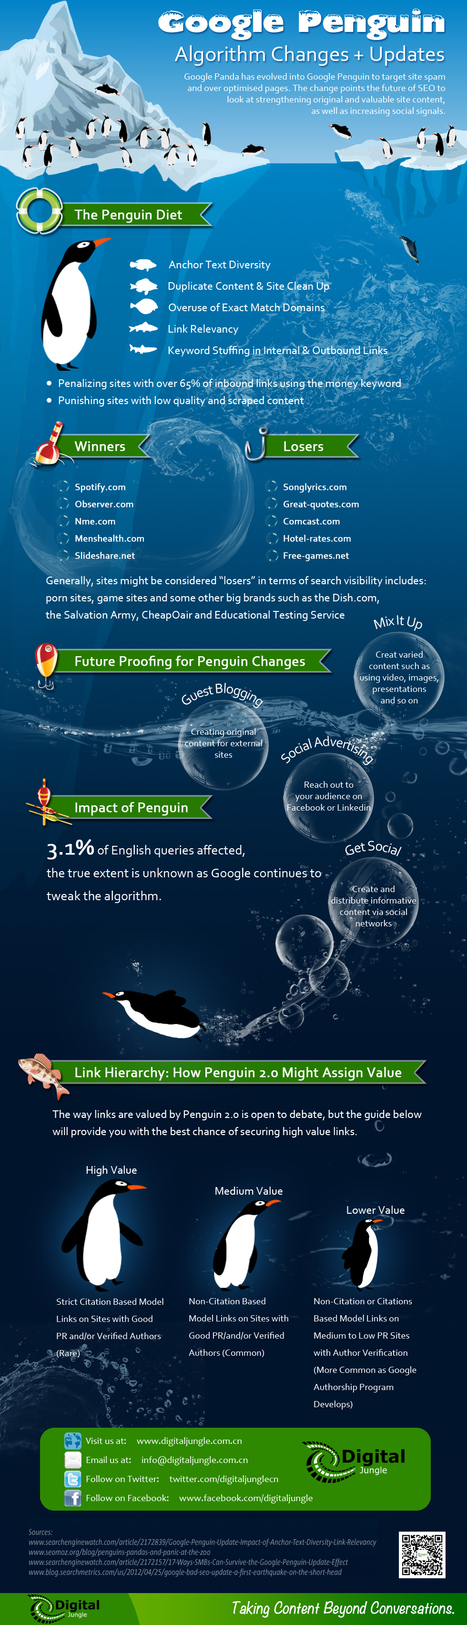 [INFOGRAPHIC] Google Penguin Update | Digital Jungle | e-commerce & social media | Scoop.it